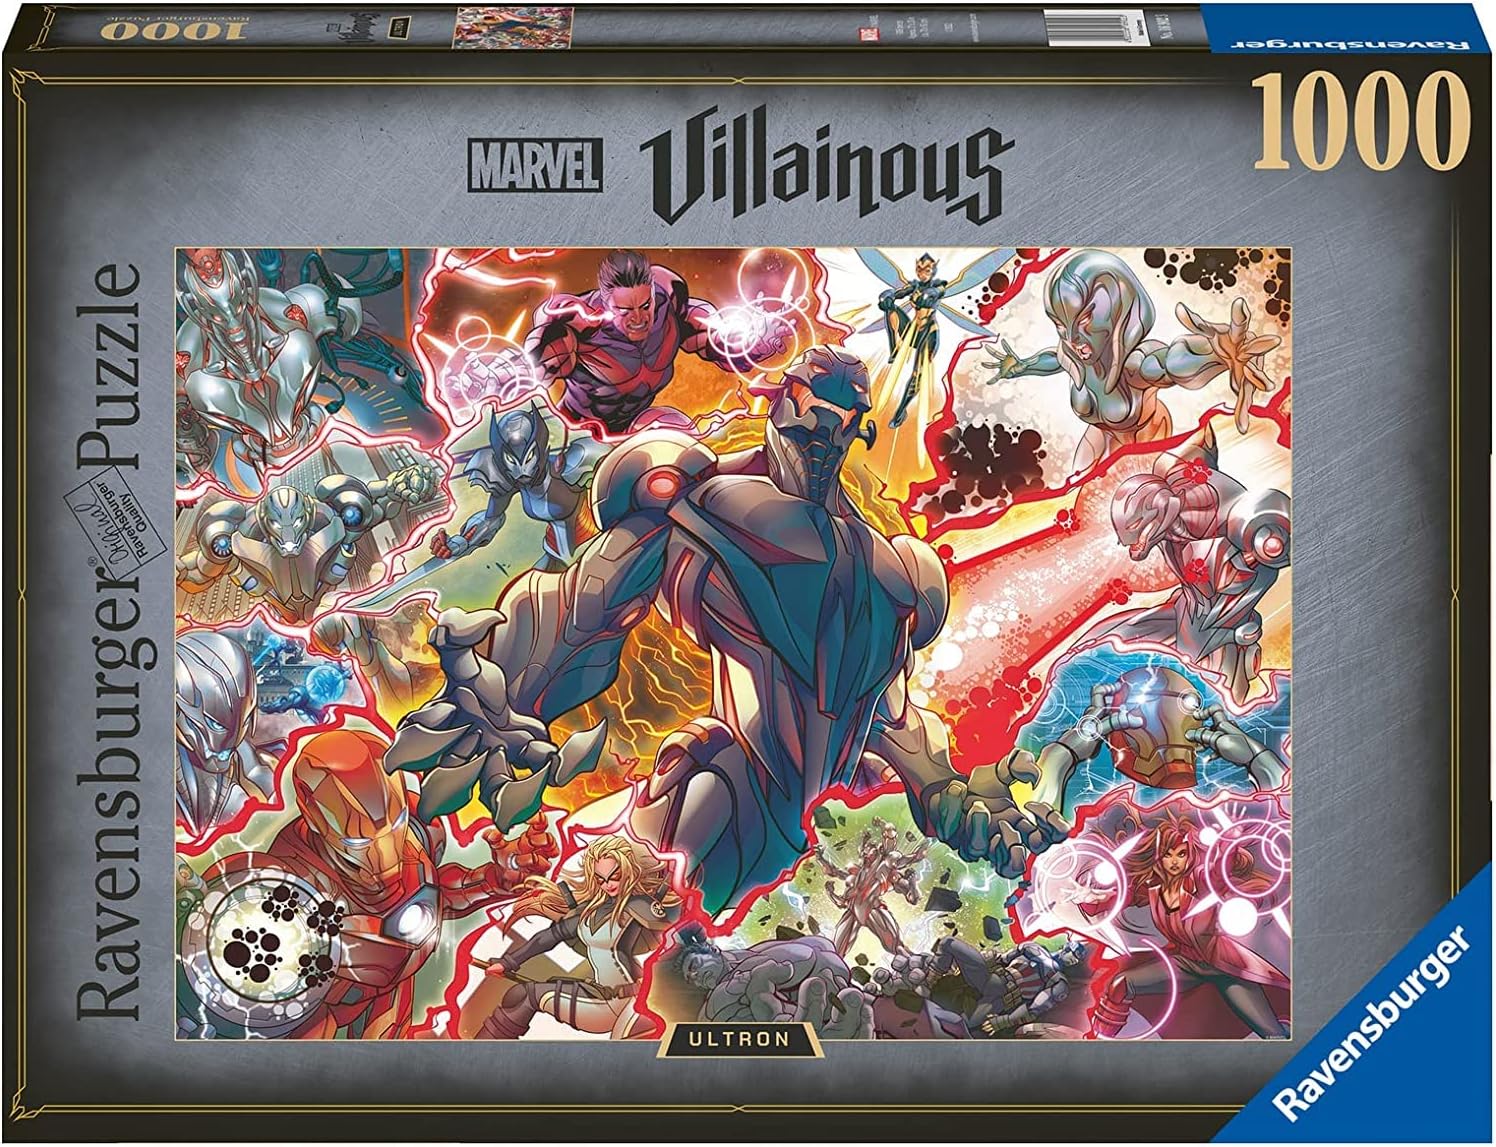 Ravensburger Puzzles (1000): Marvel Villainous: Ultron 